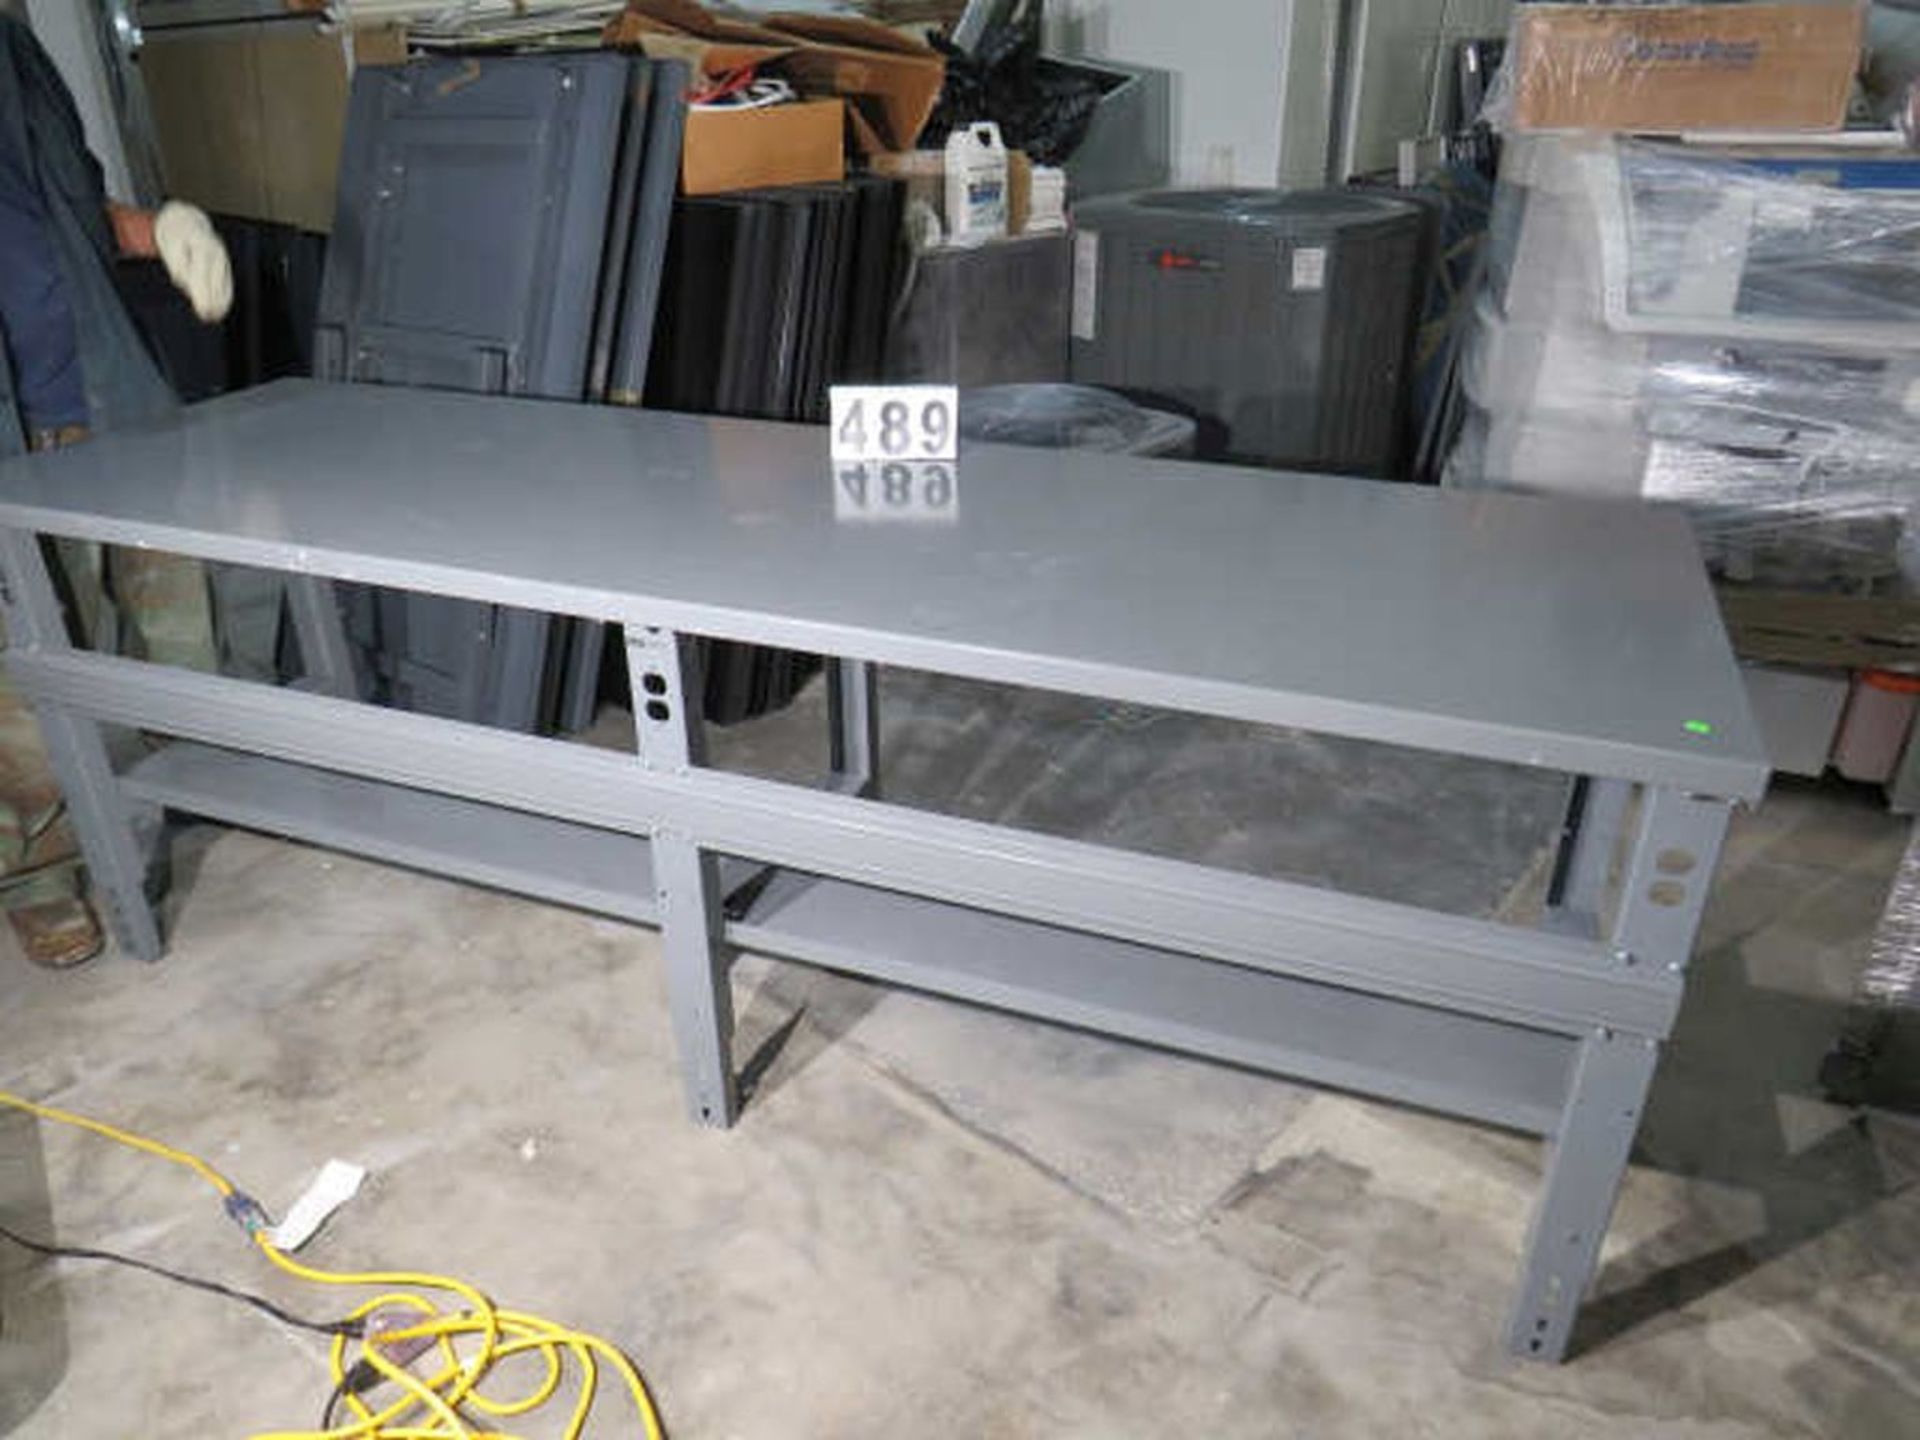 Steel Industrial Work Table, ULINE, Adjustable Height,96" long x 30" deep